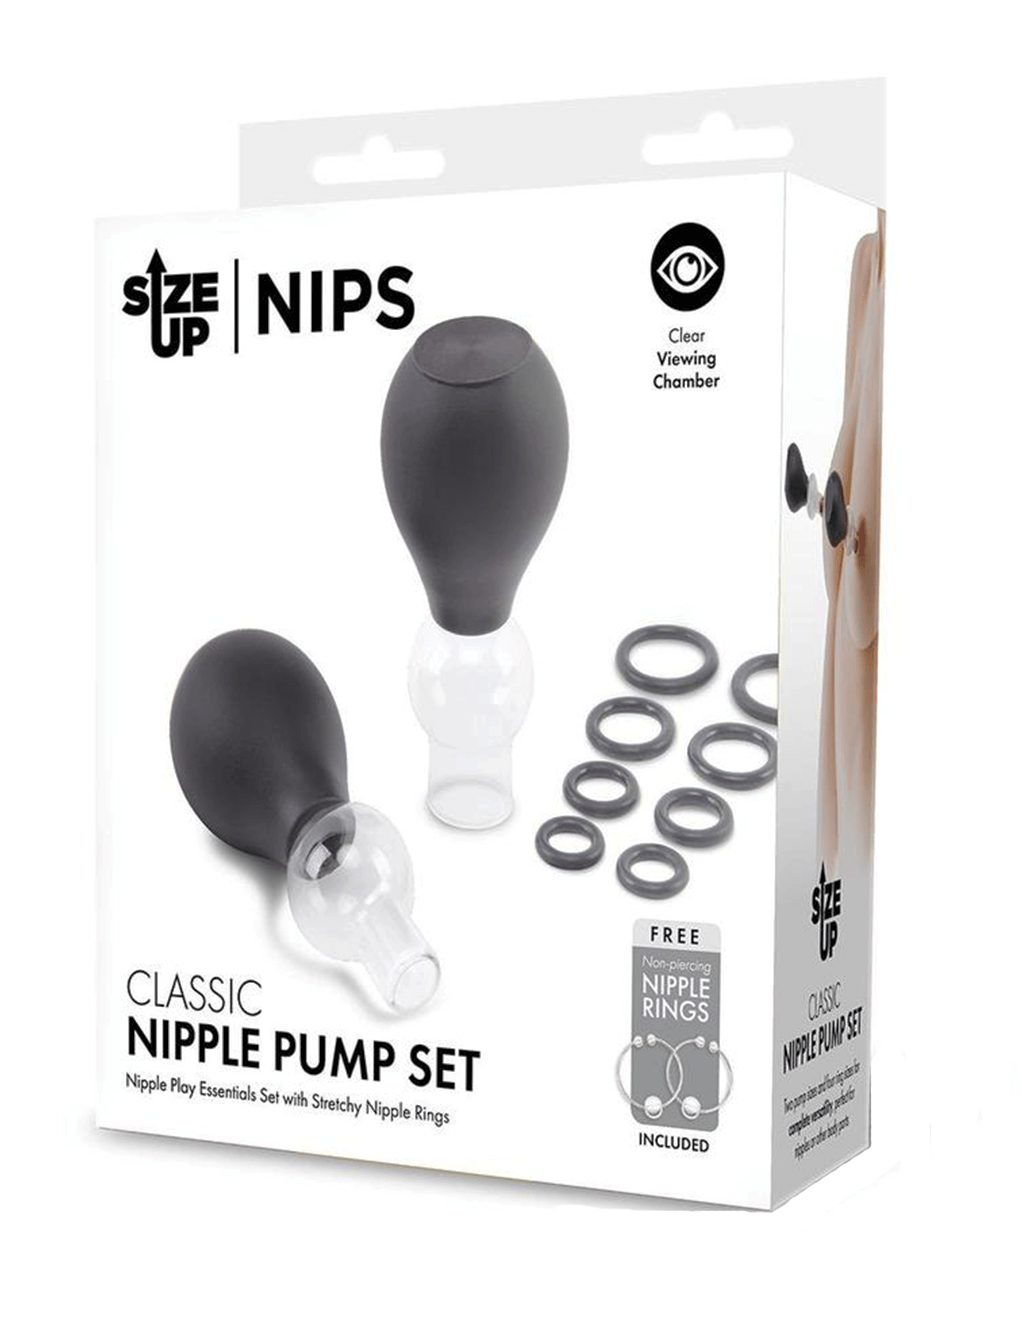 Size Up Classic Nipple Pump Set - Box